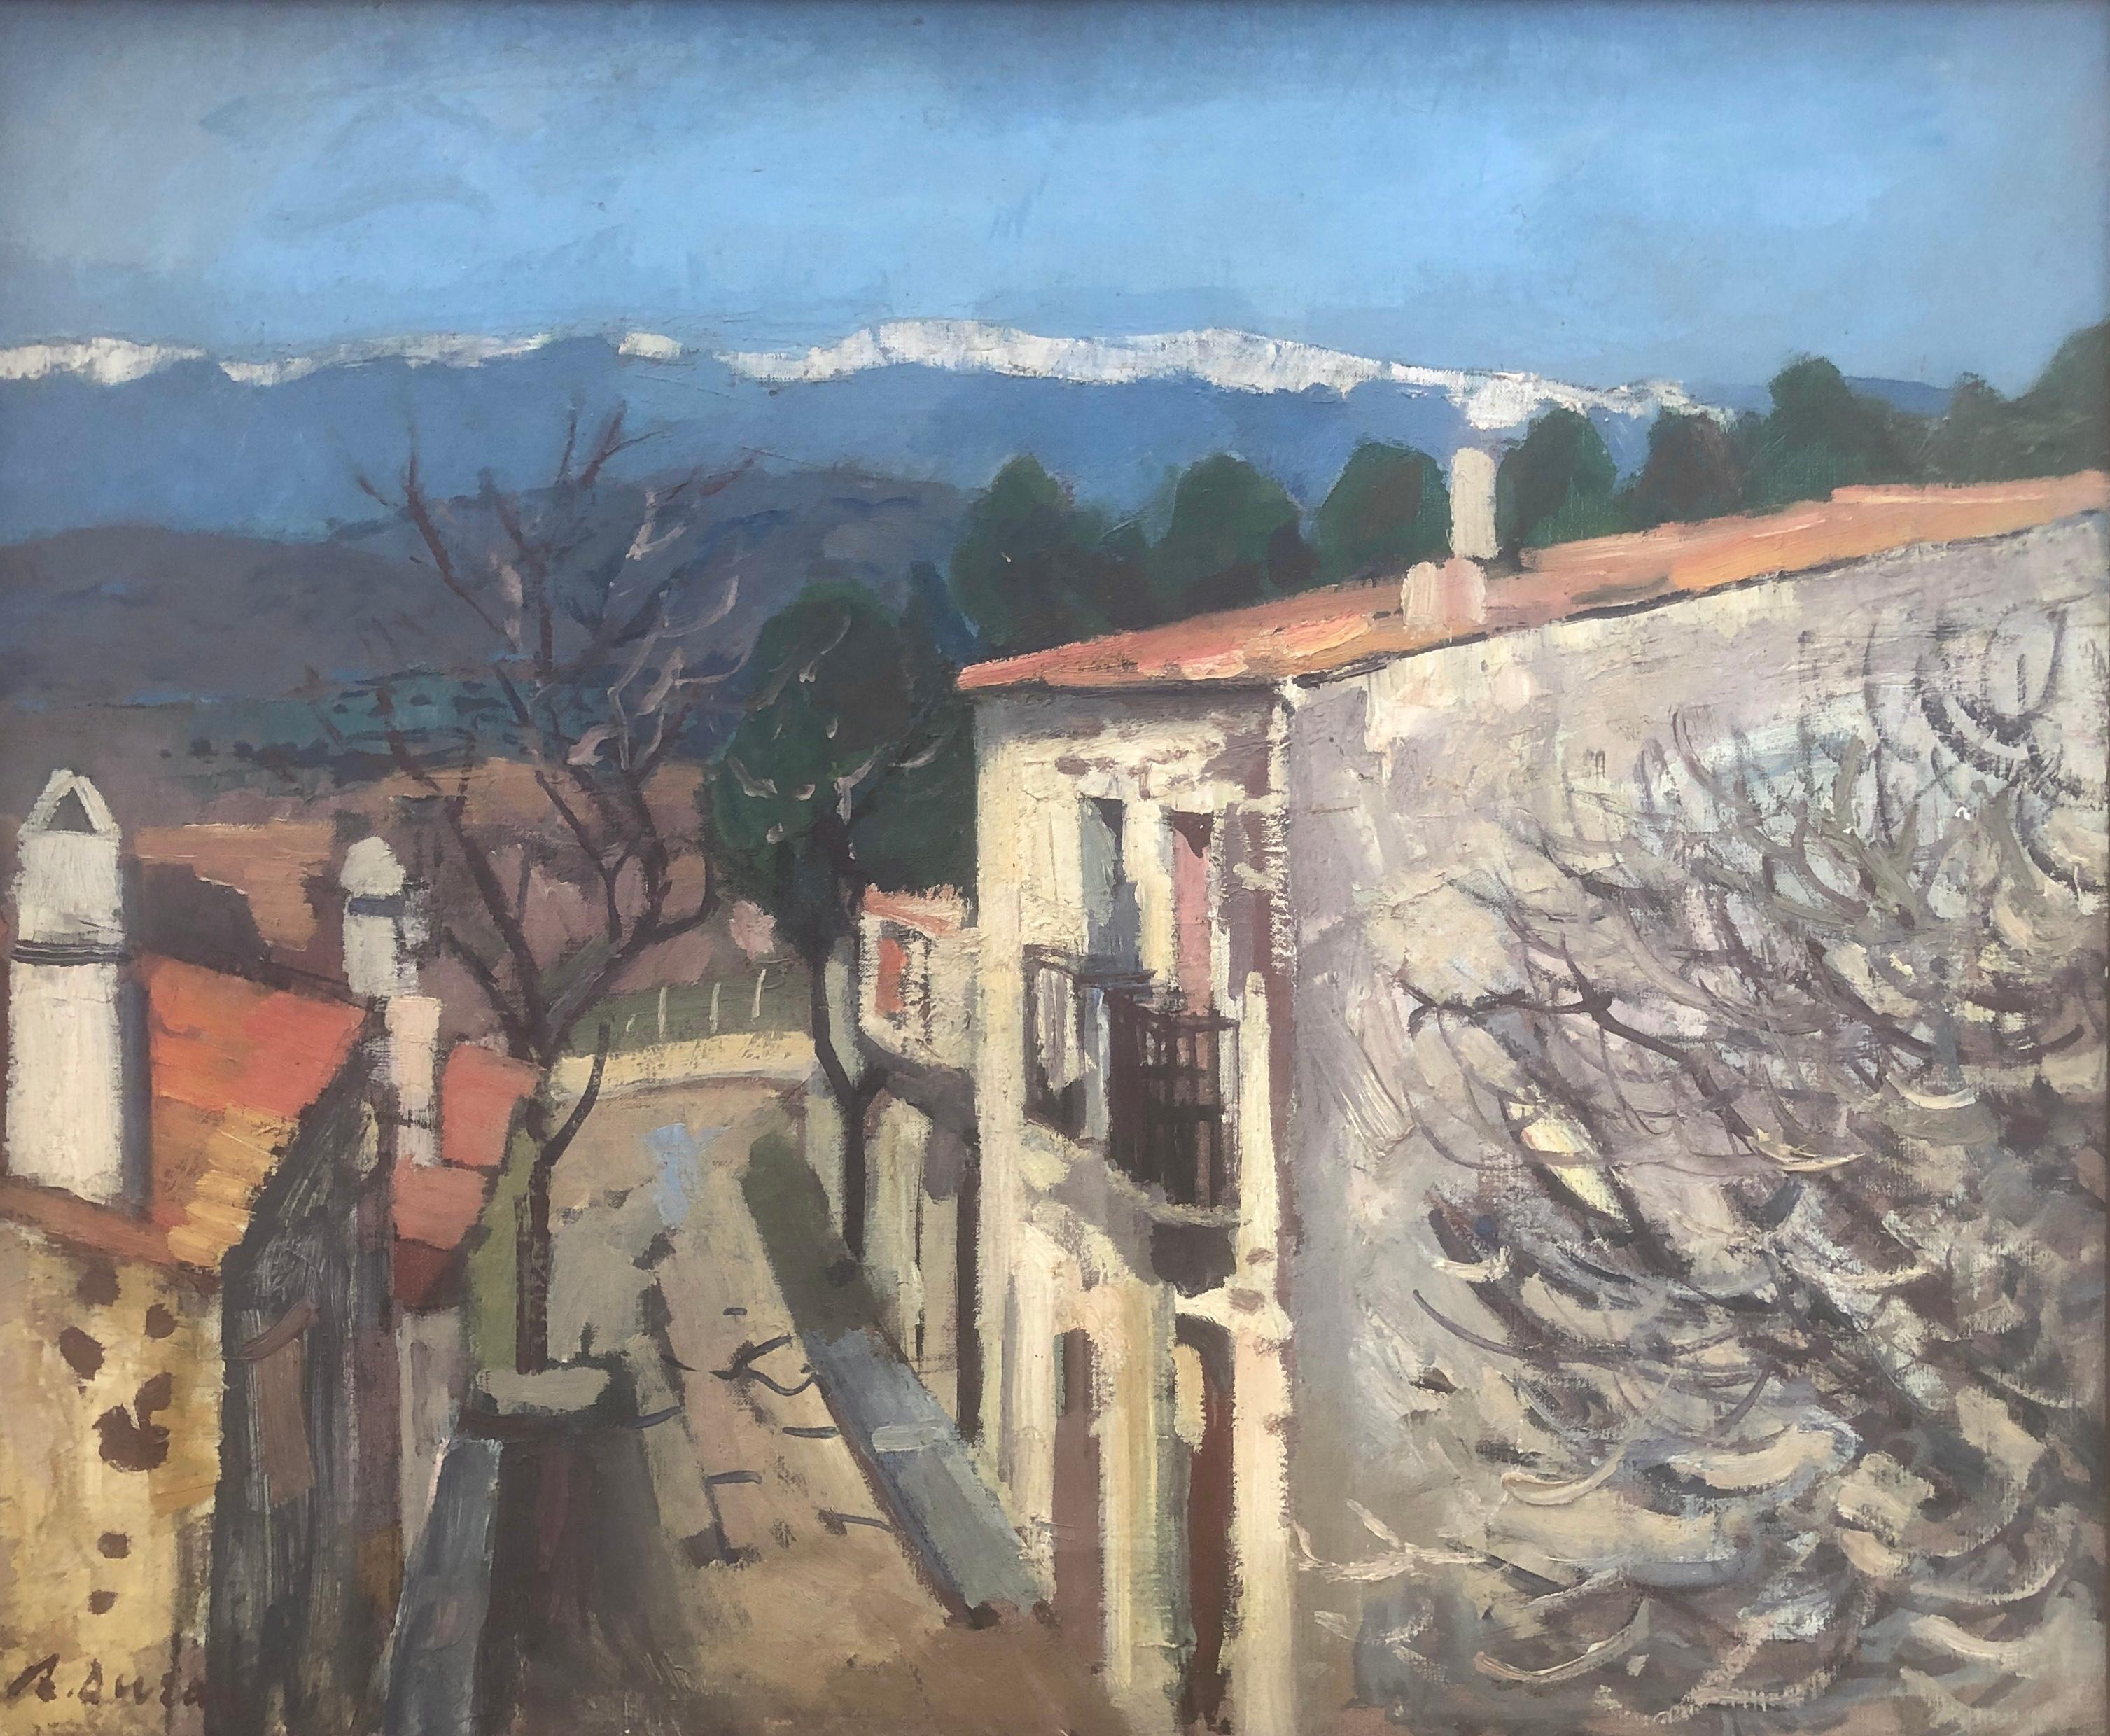 Rafael Duran Benet Landscape Painting - Town Spanish landscape oil on canvas painting Spain mediterranean